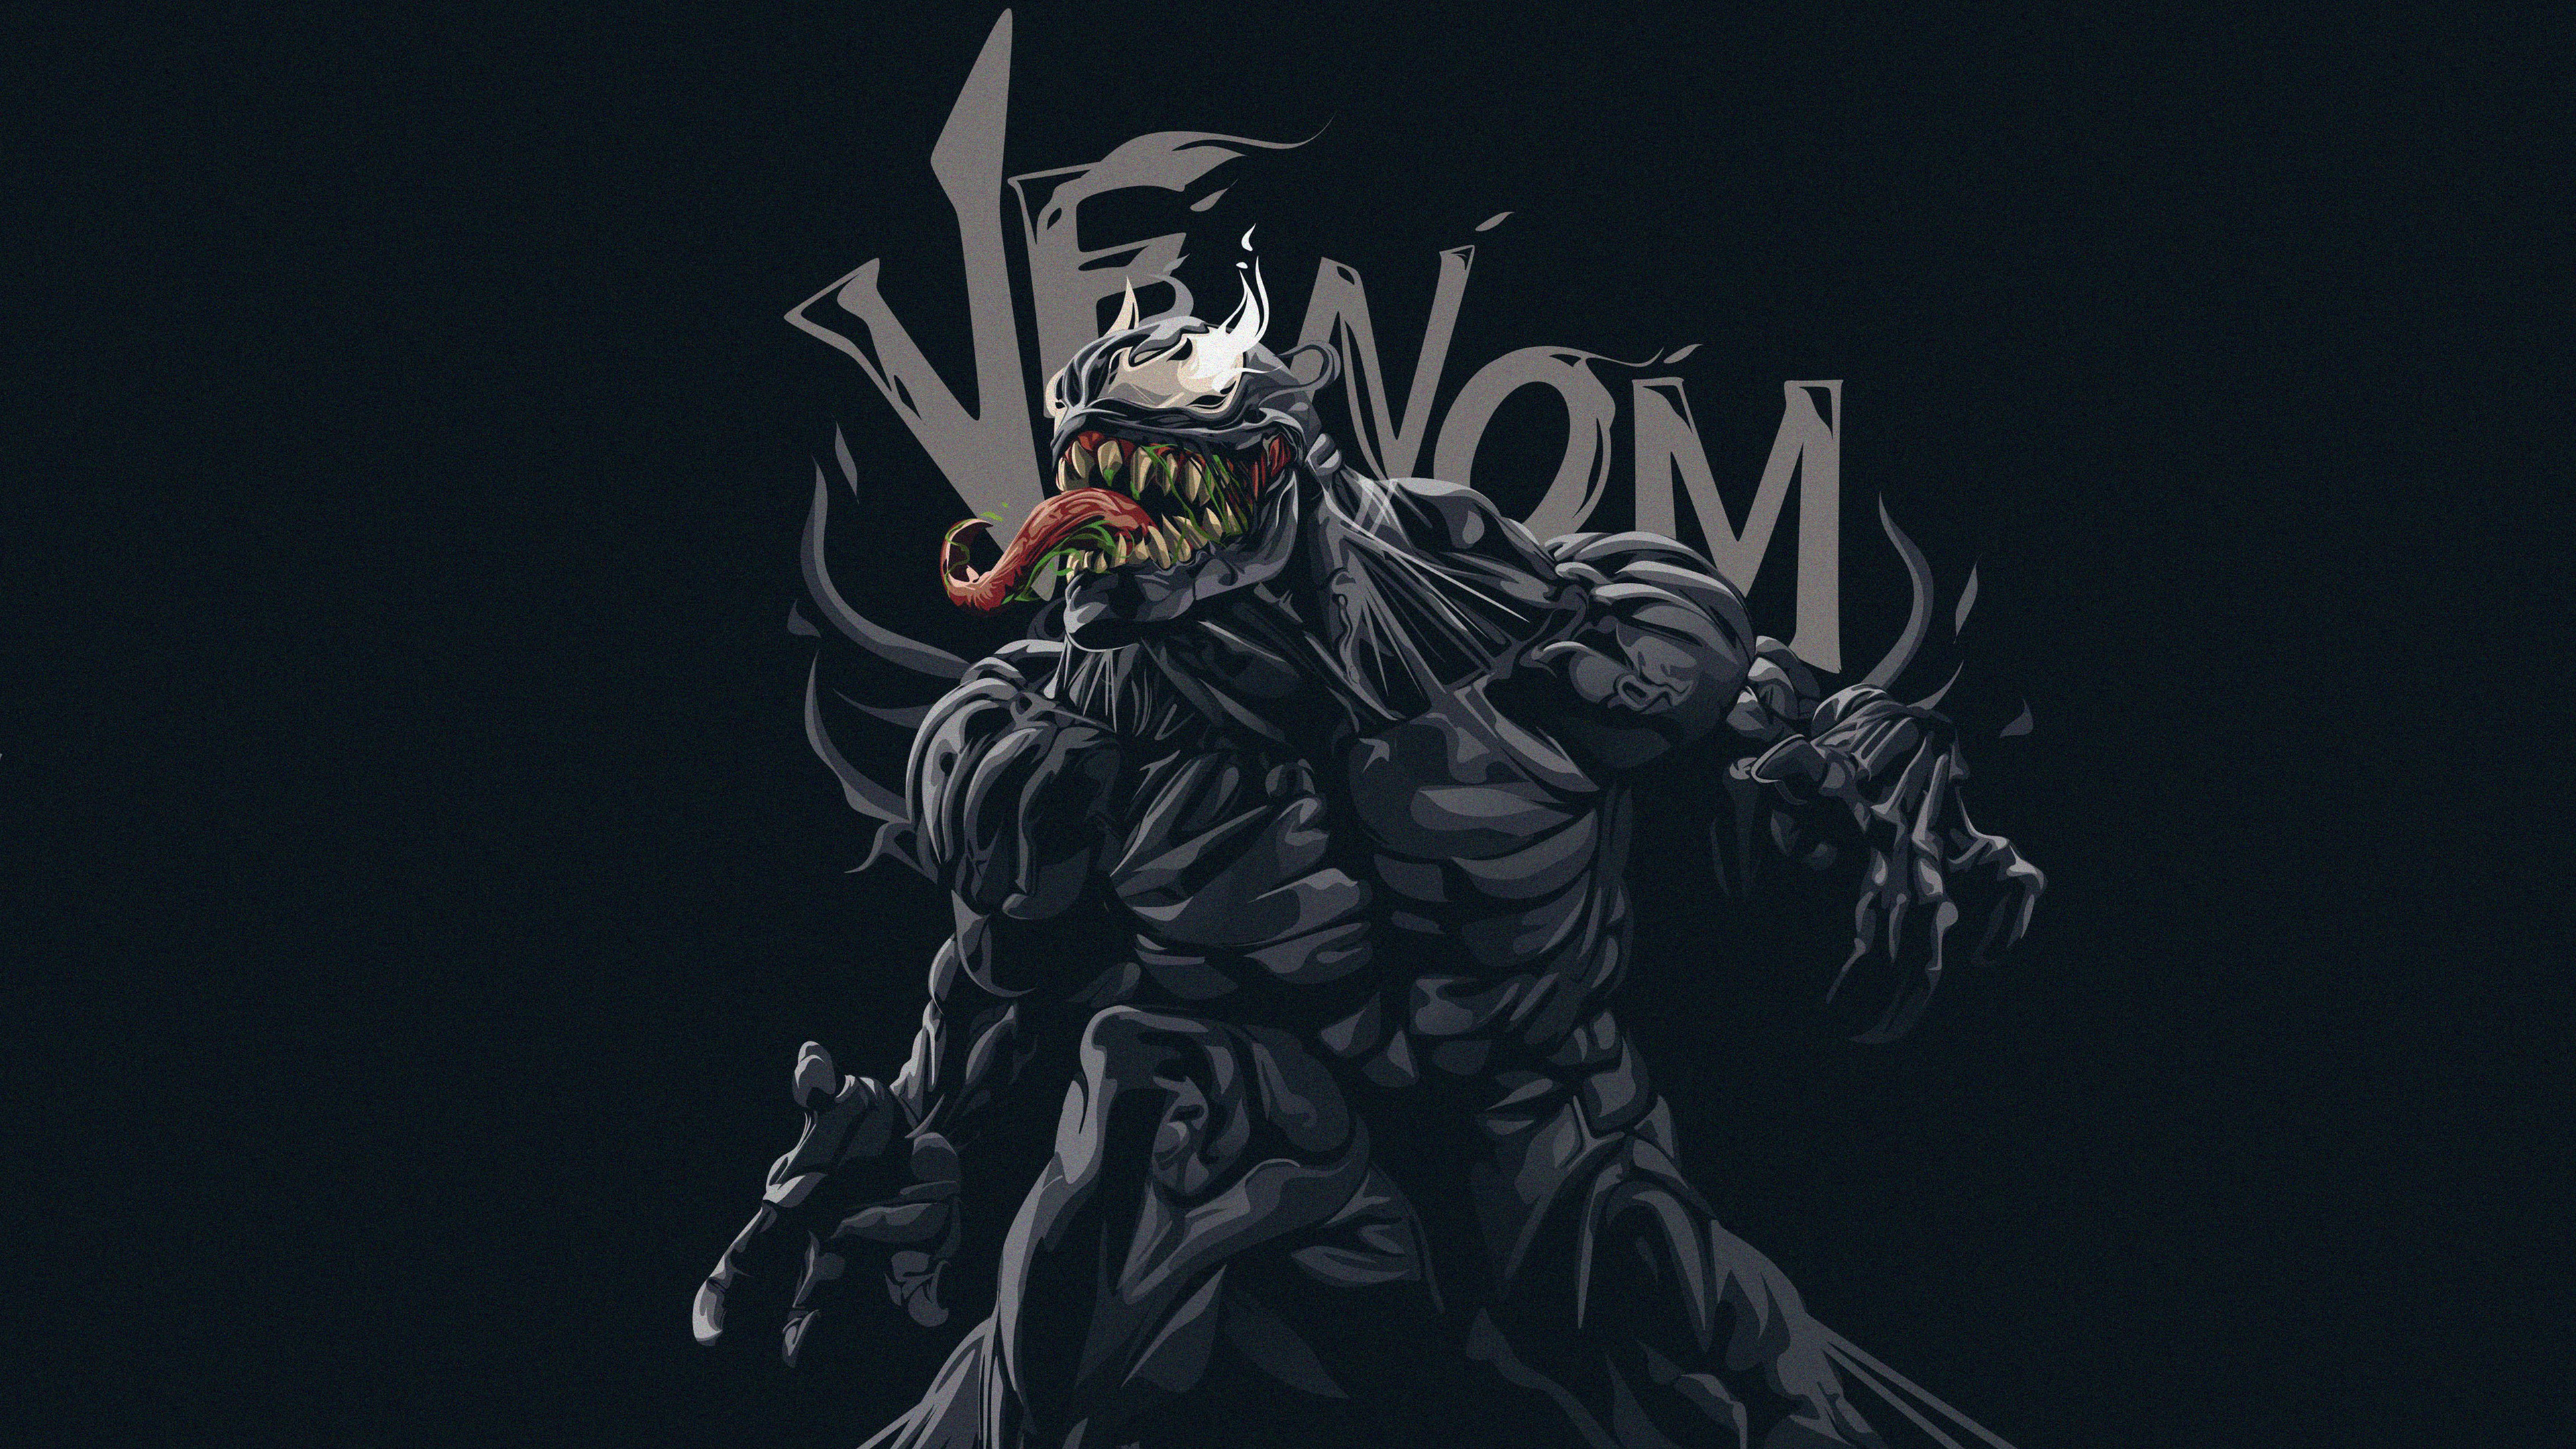 Venom Artwork 2019 4K Wallpapers | HD Wallpapers